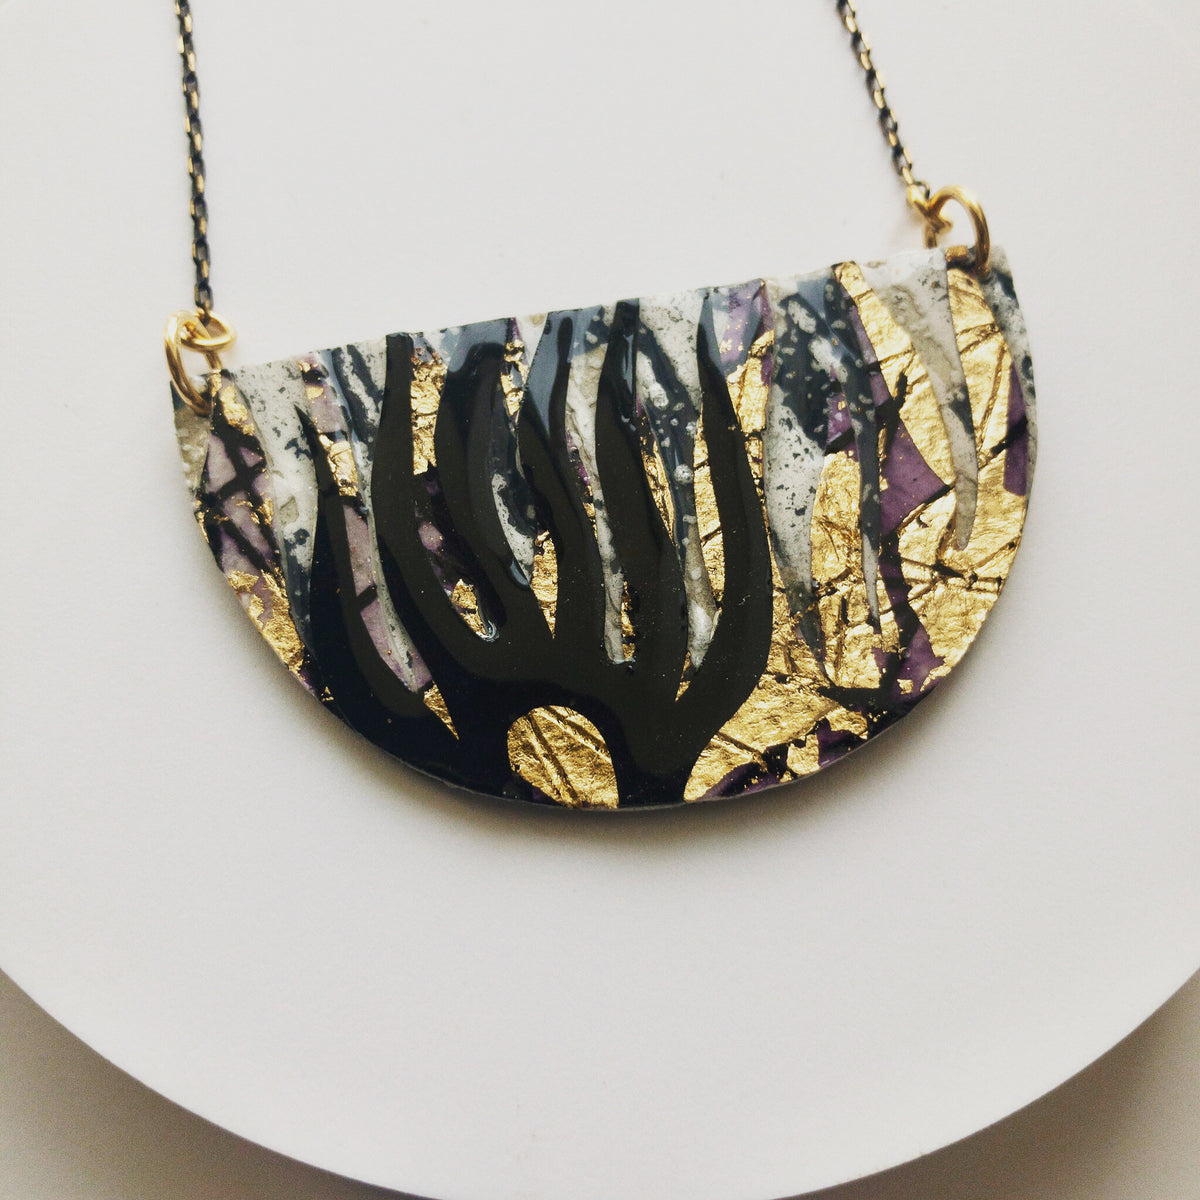 Bláth batik textile necklace in dove/black/gold